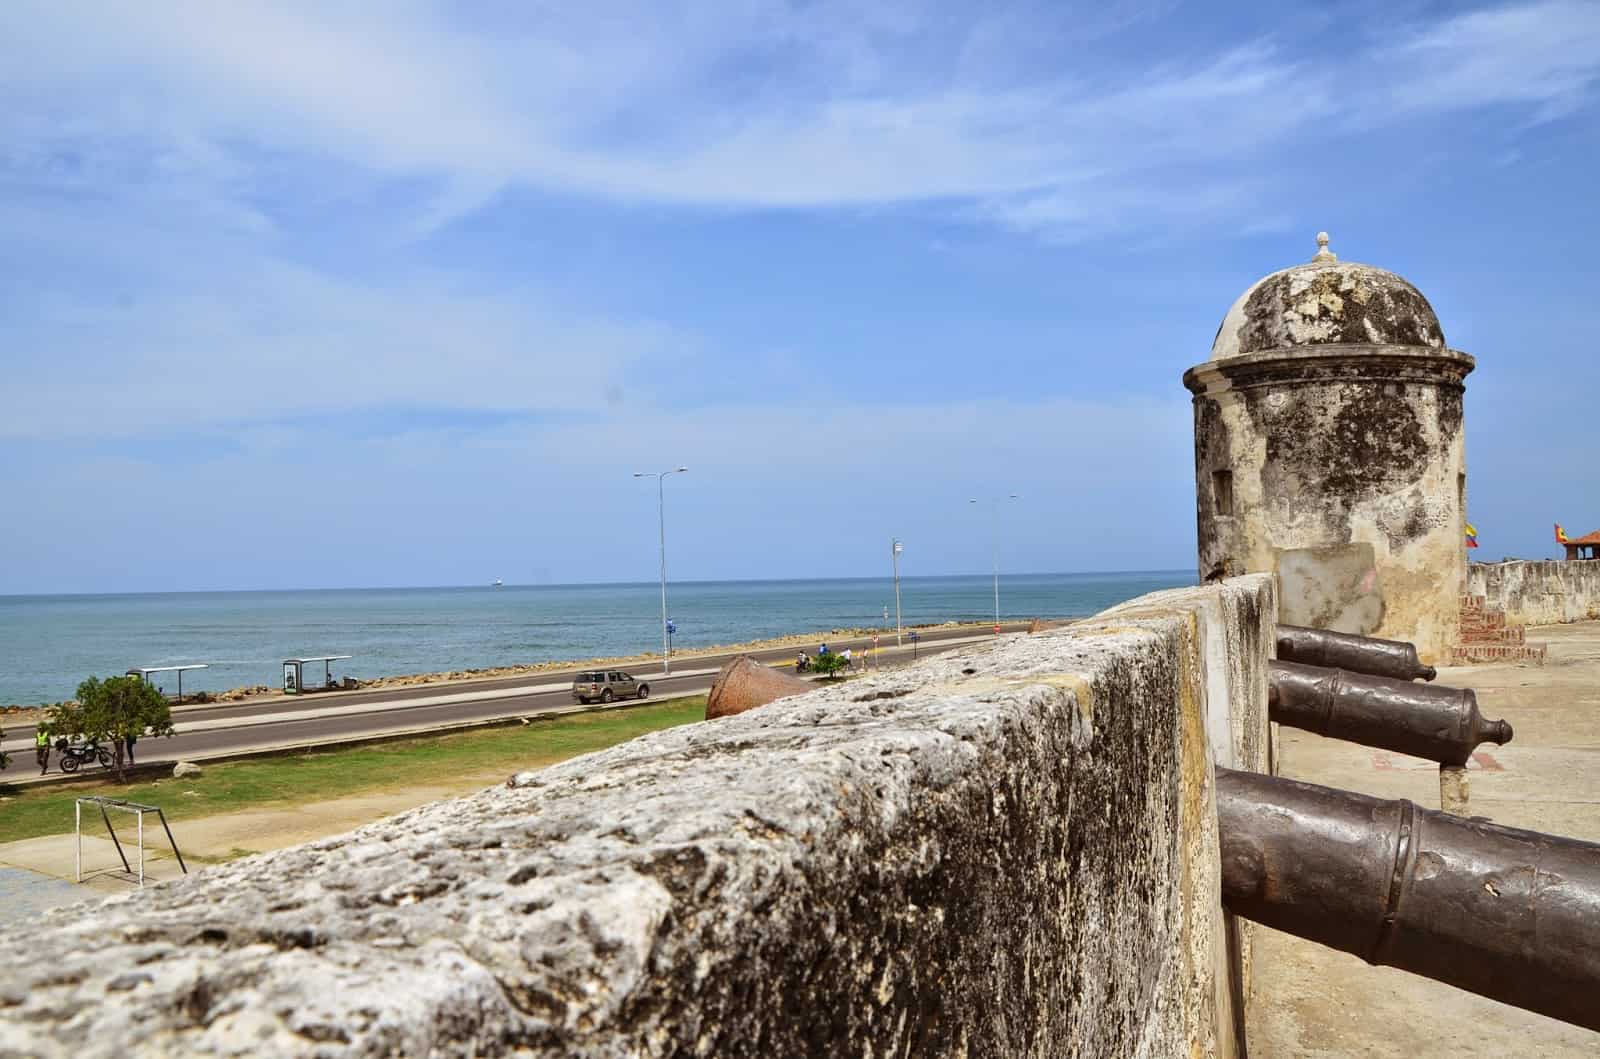 City walls of Cartagena, Bolívar, Colombia